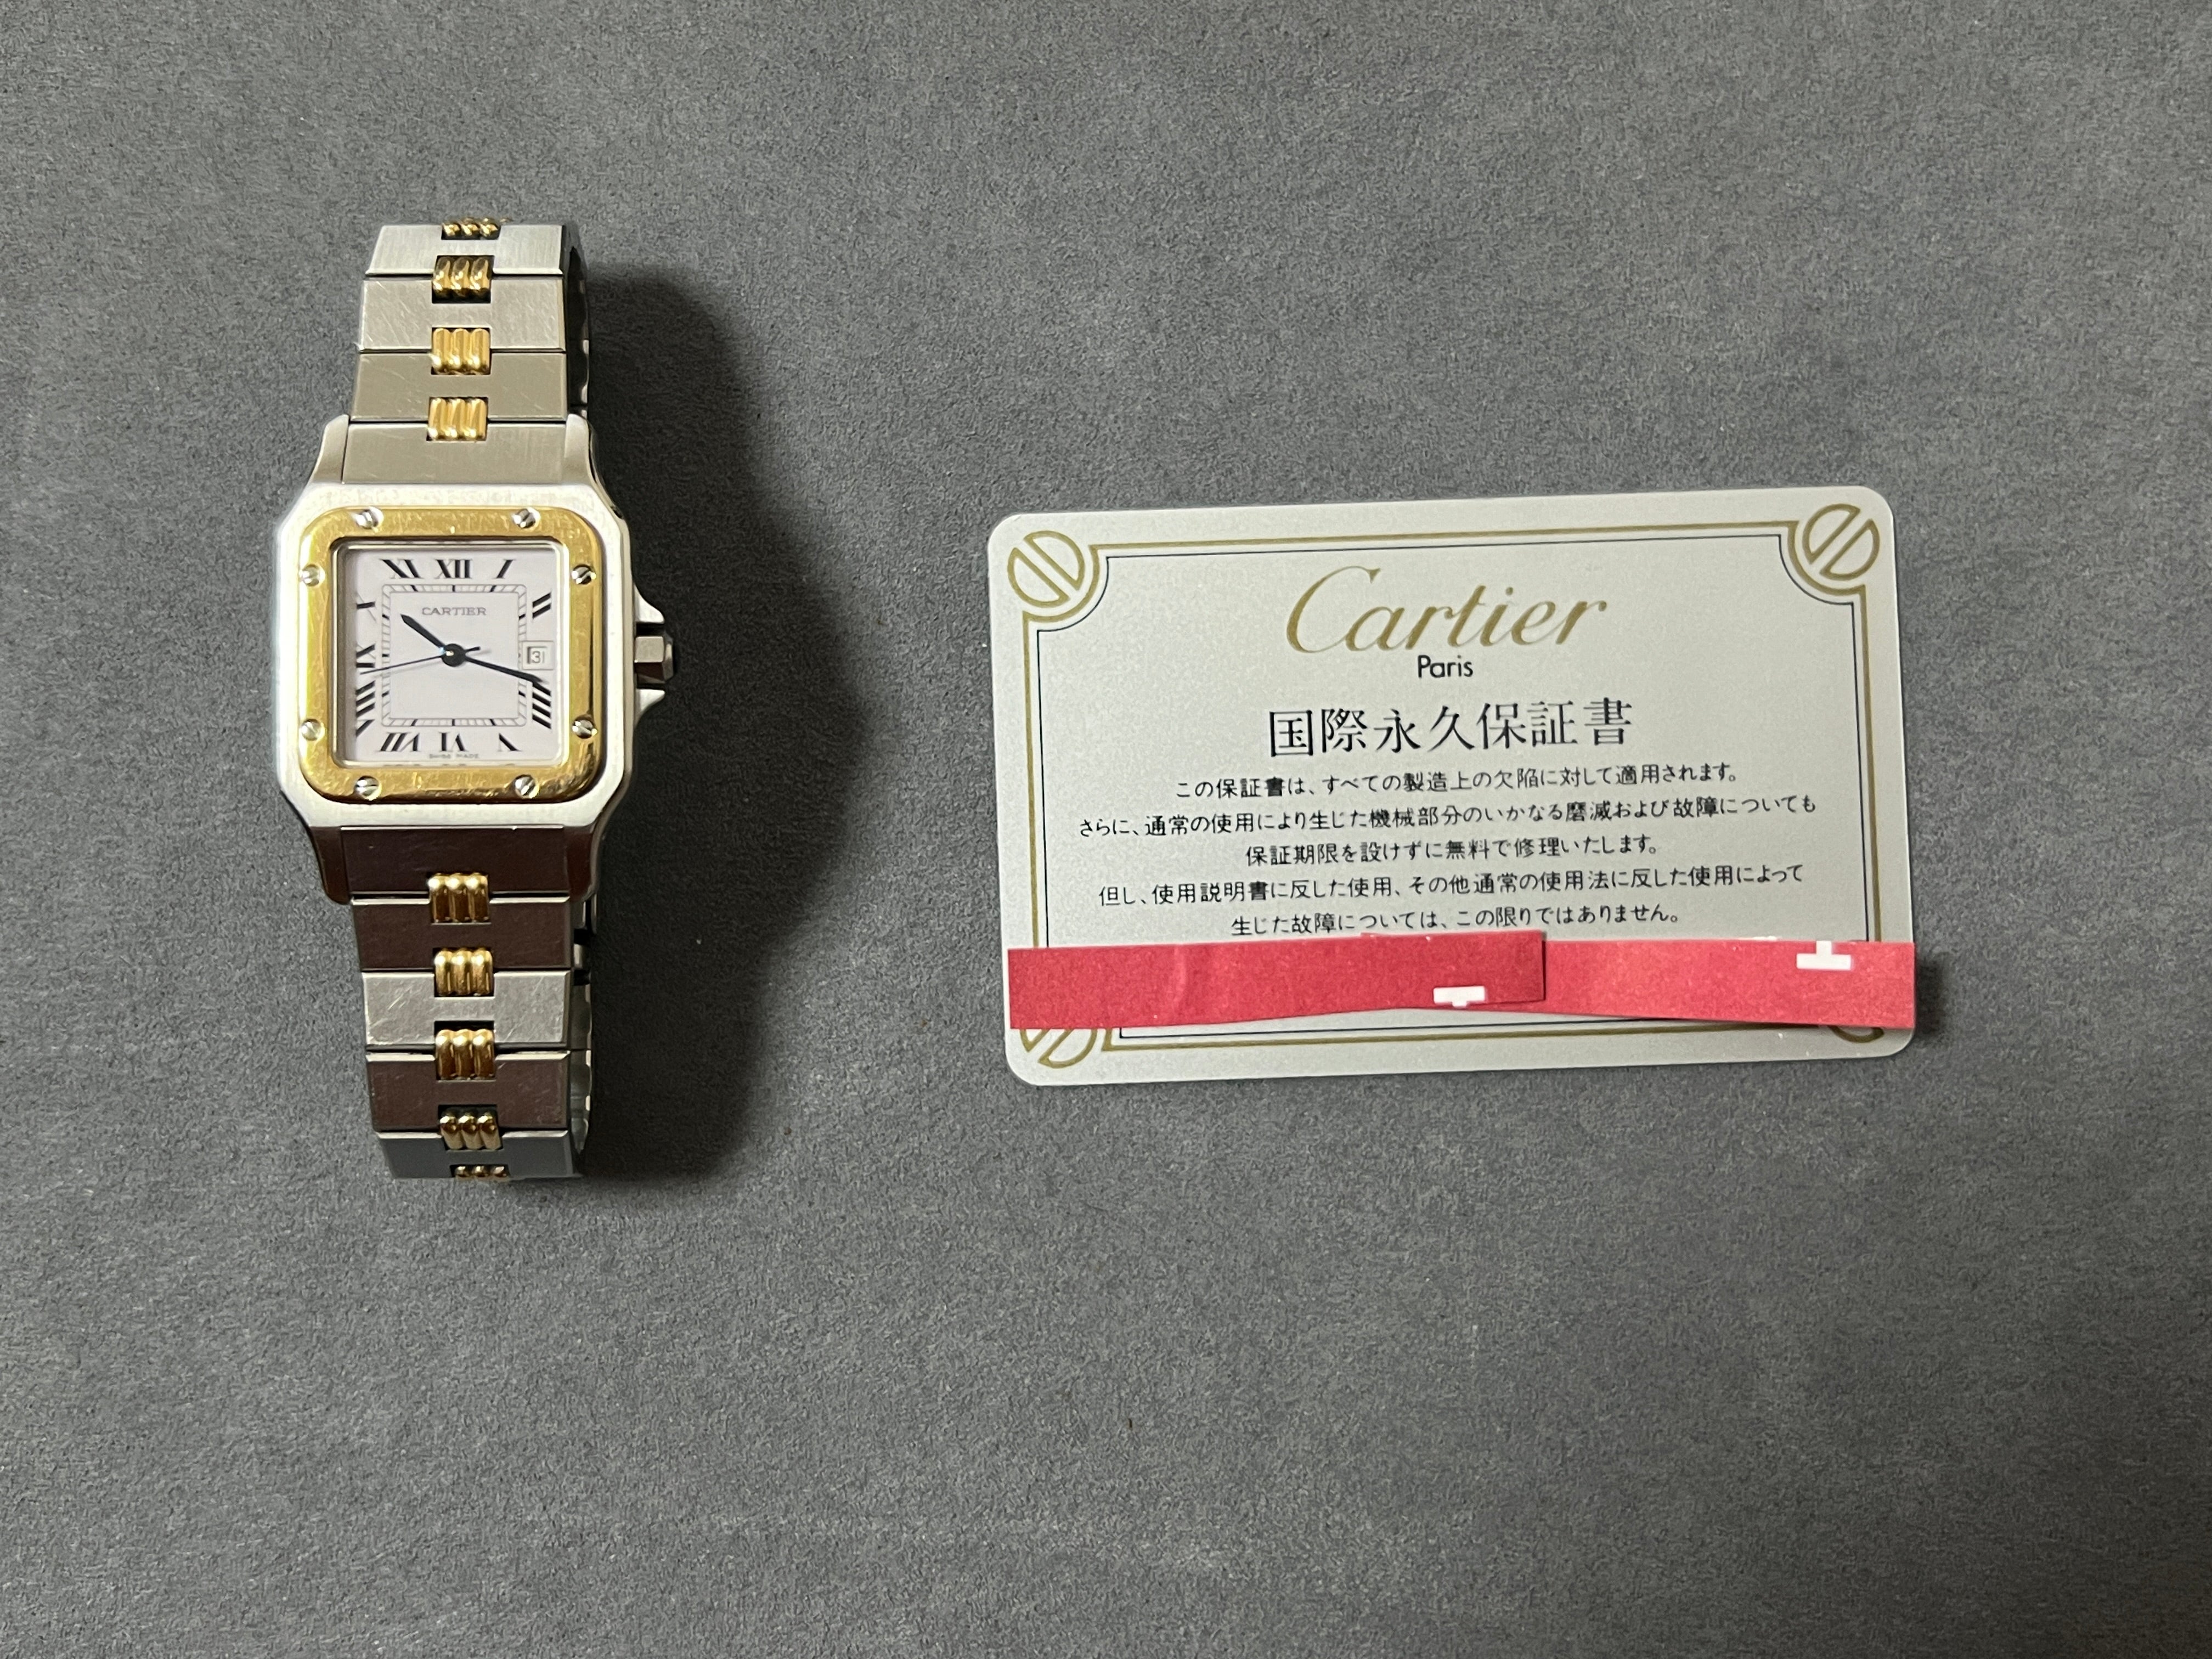 Cartier's "International Permanent Warranty"